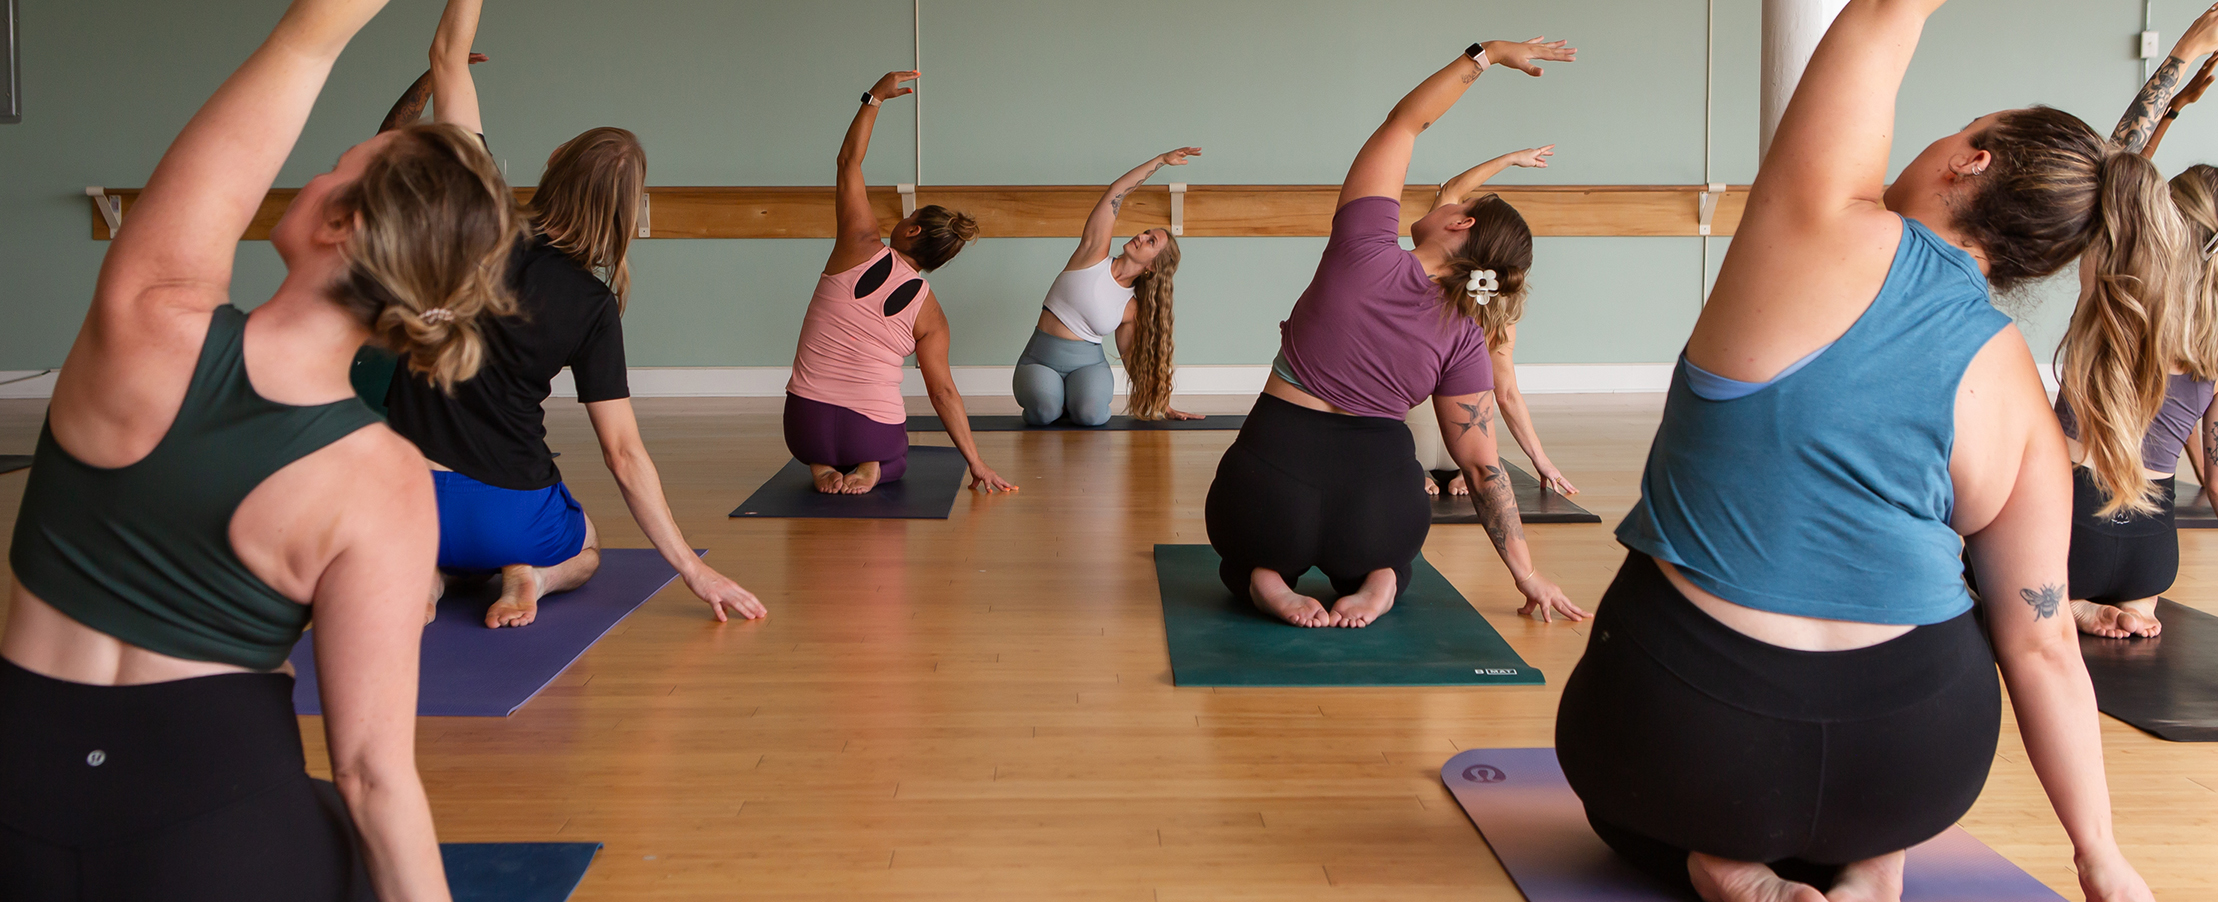 Yoga Teacher Training and Instructor Courses Near You